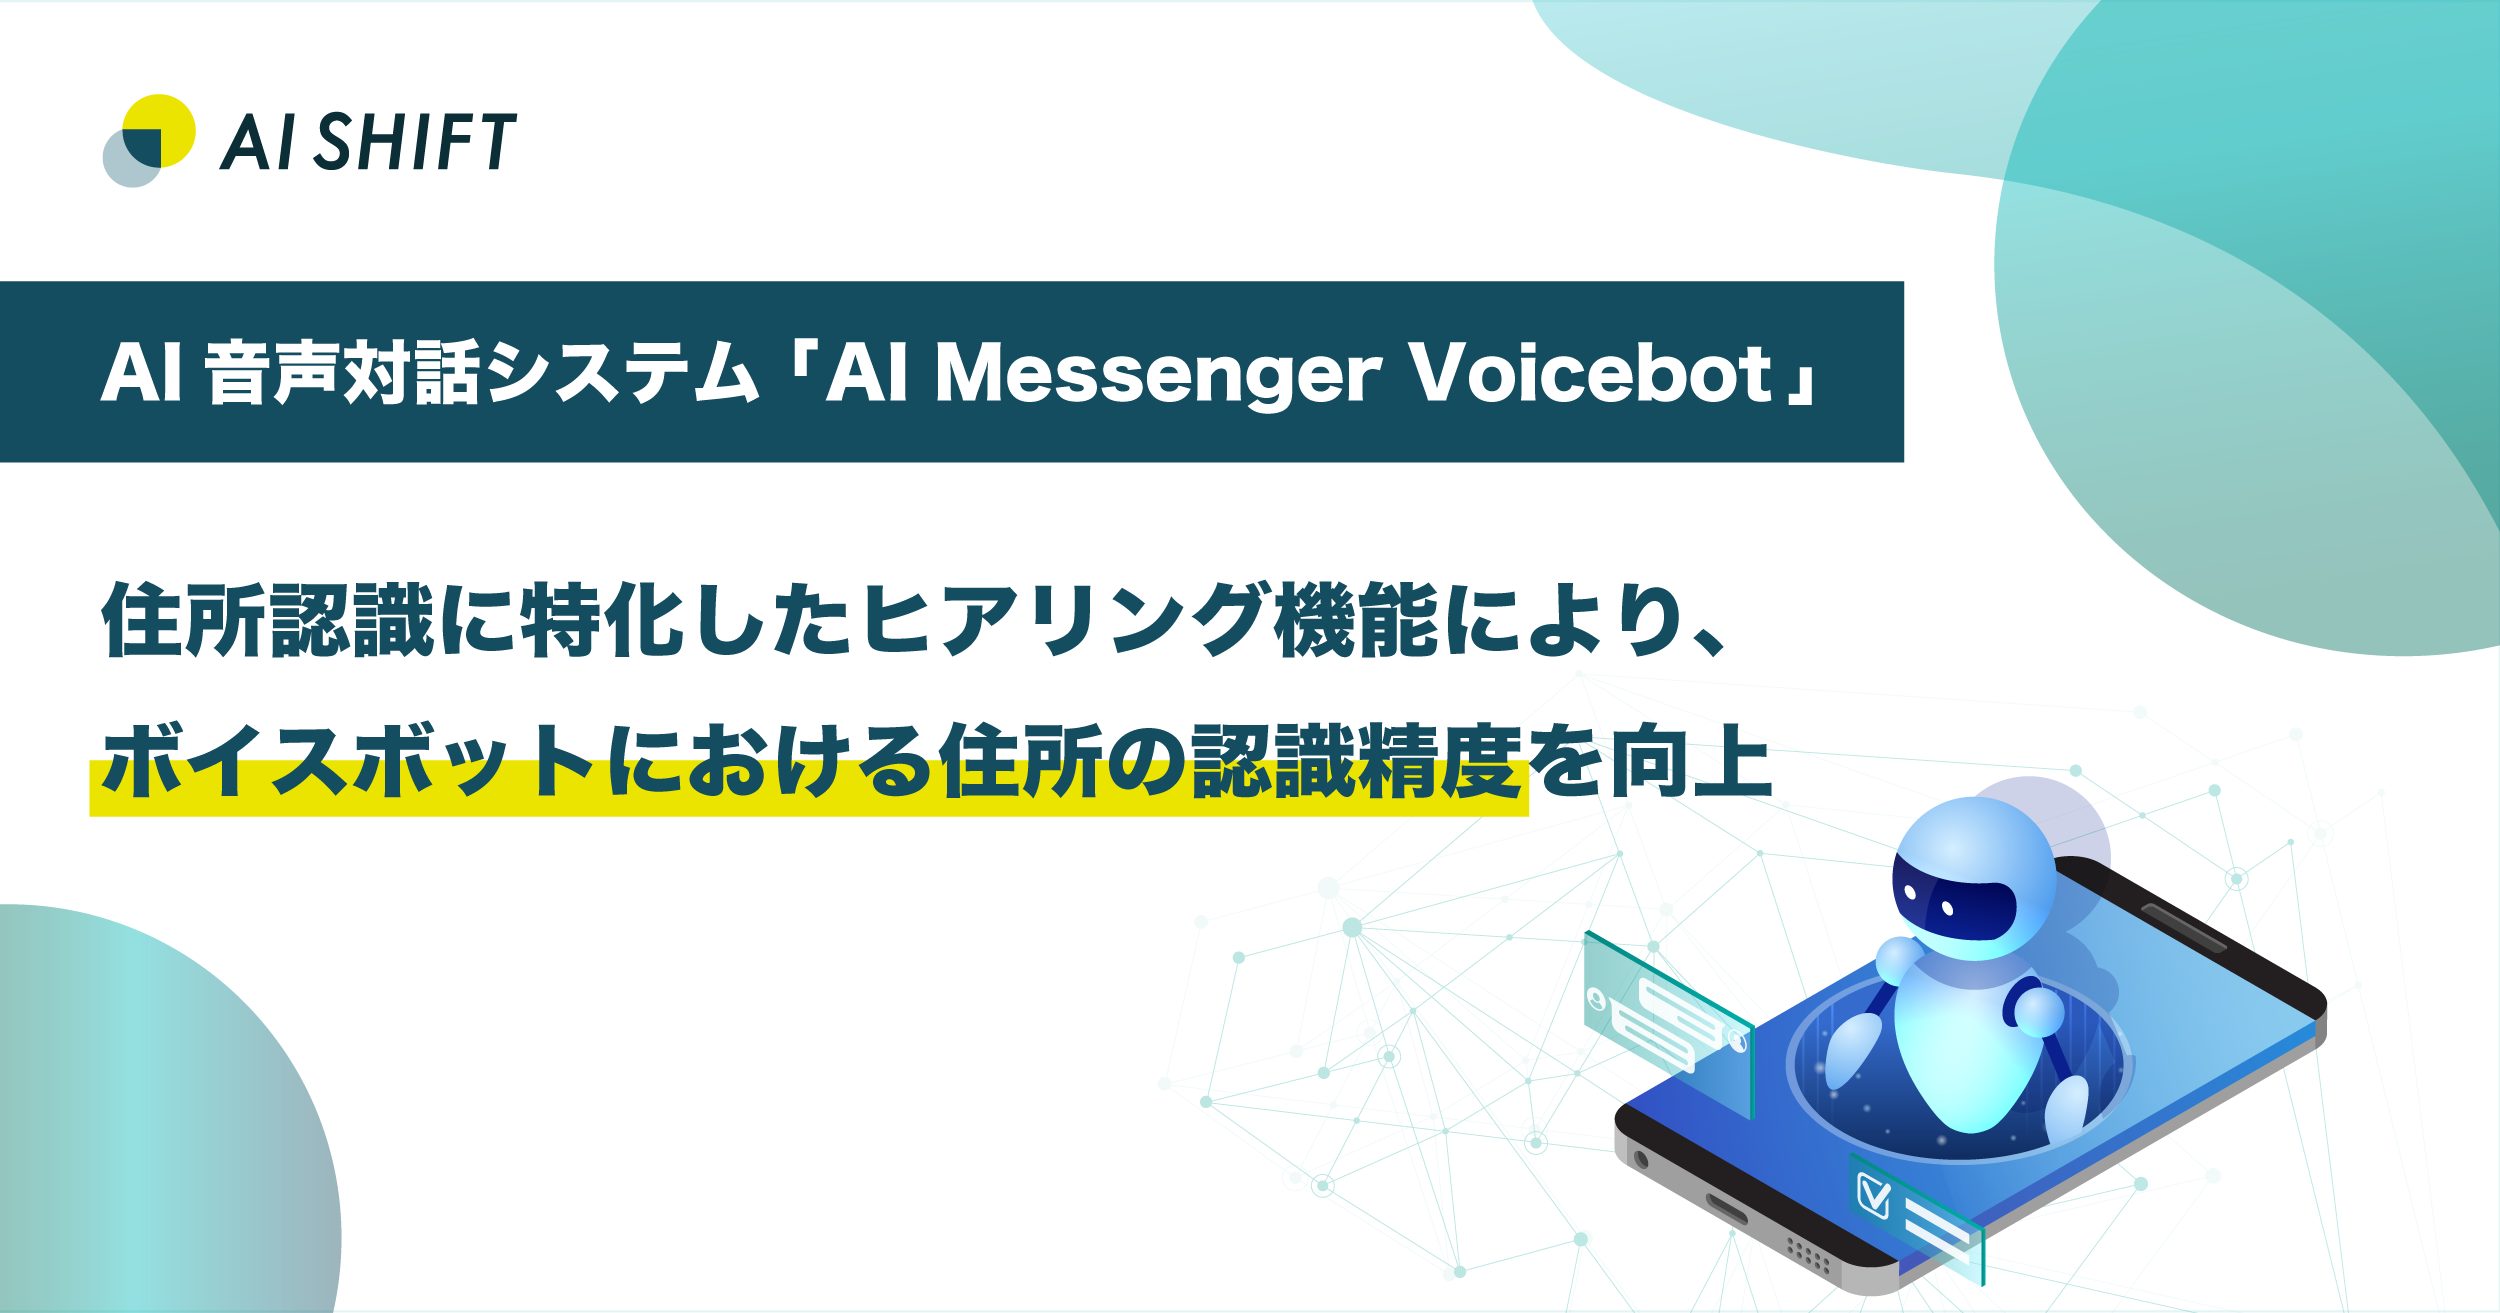 AI自動音声対話システム「AI Messenger Voicebot」、住所認識に特化したヒアリング機能を実装